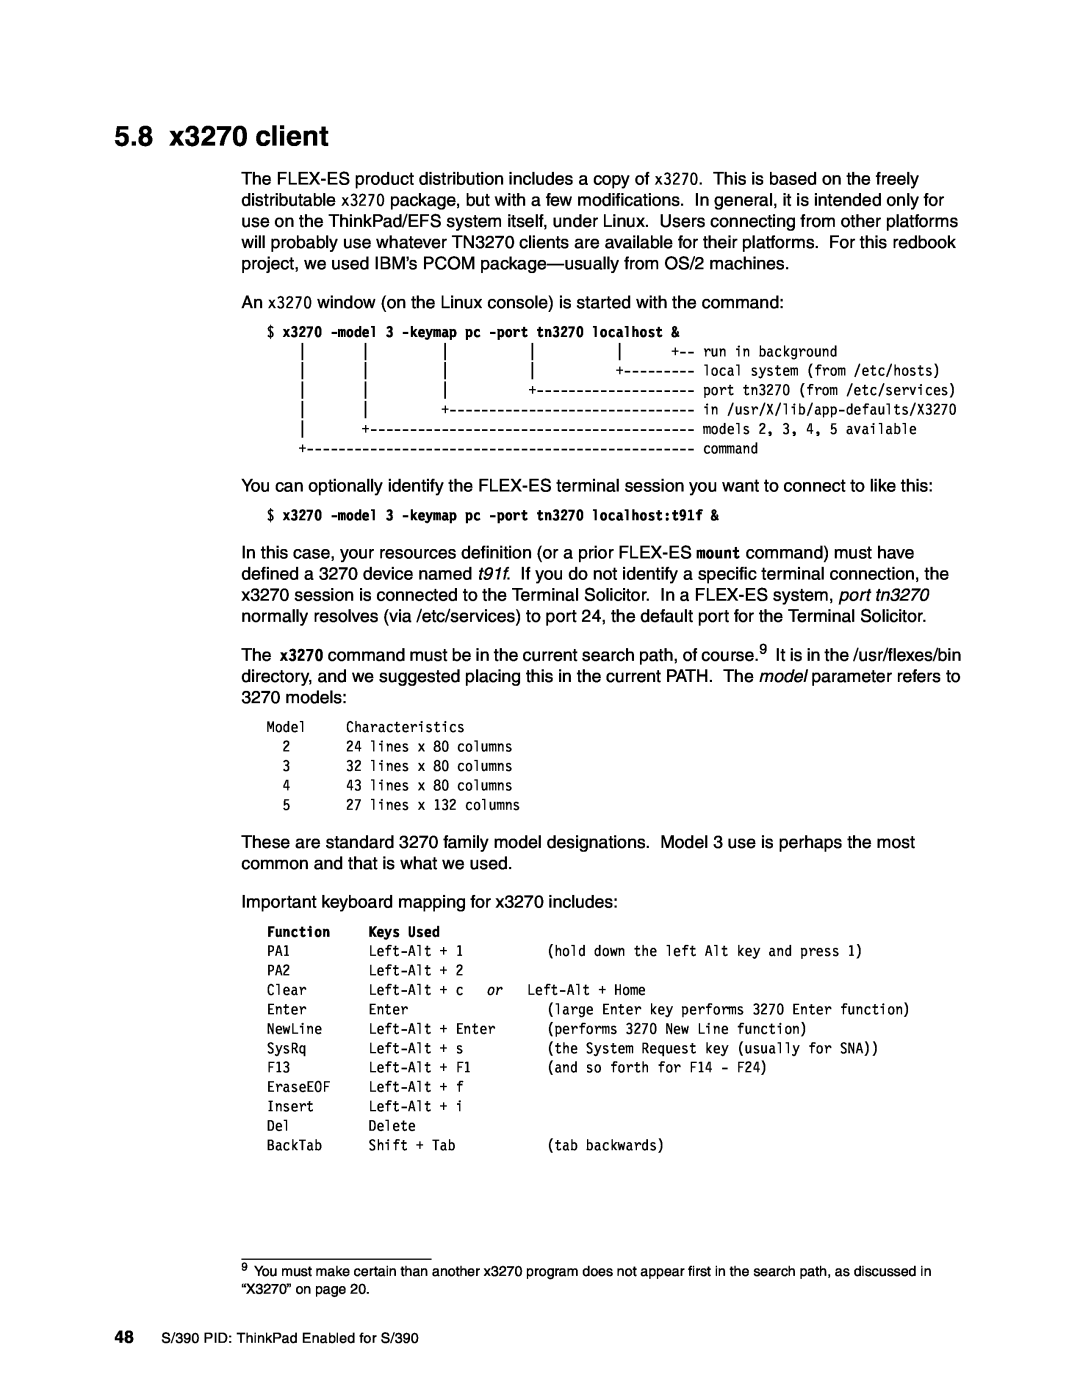 IBM s/390 manual 5.8 x3270 client 